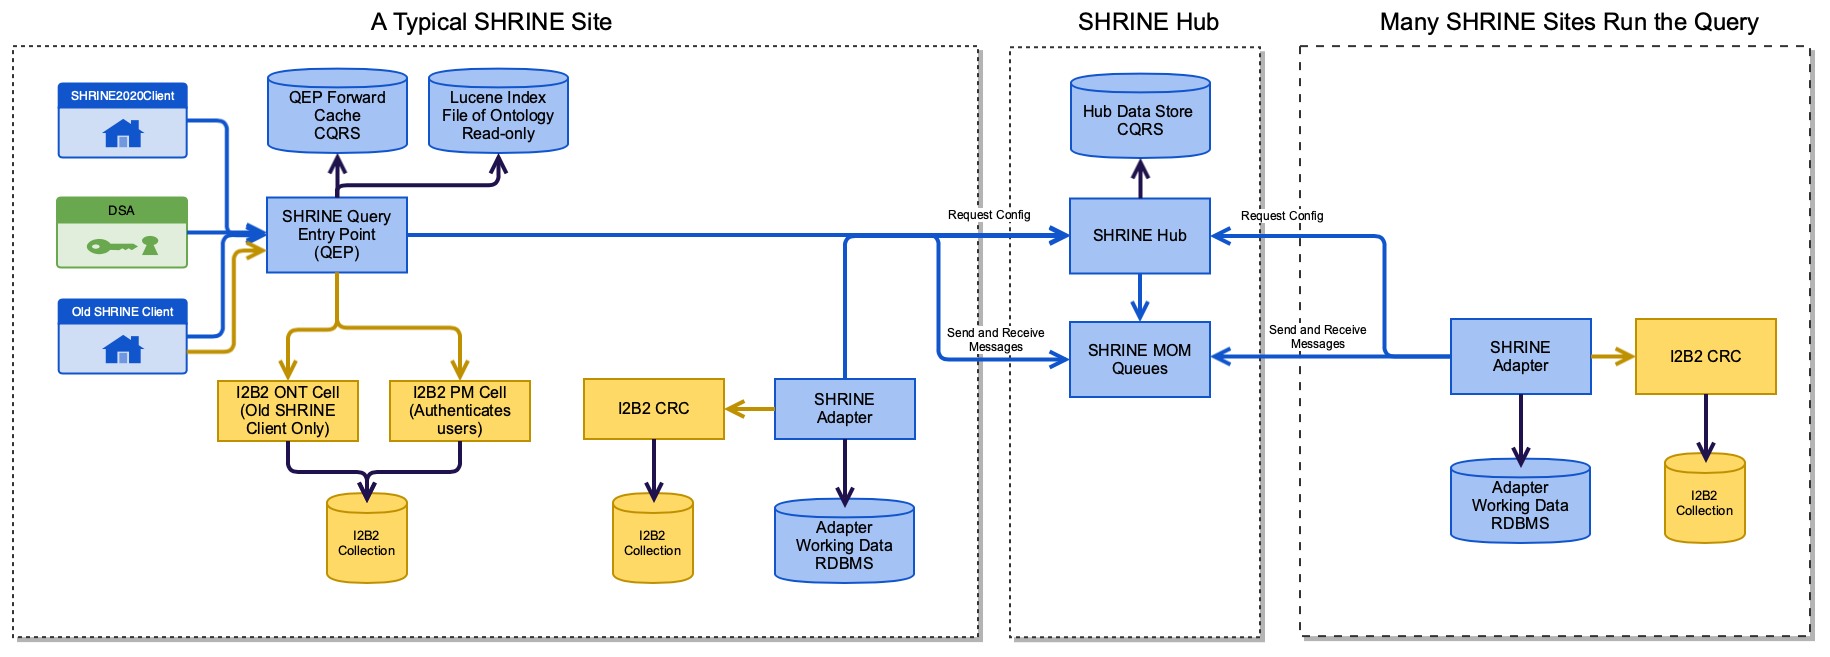 SHRINE 3.0 Architecture Upgrade